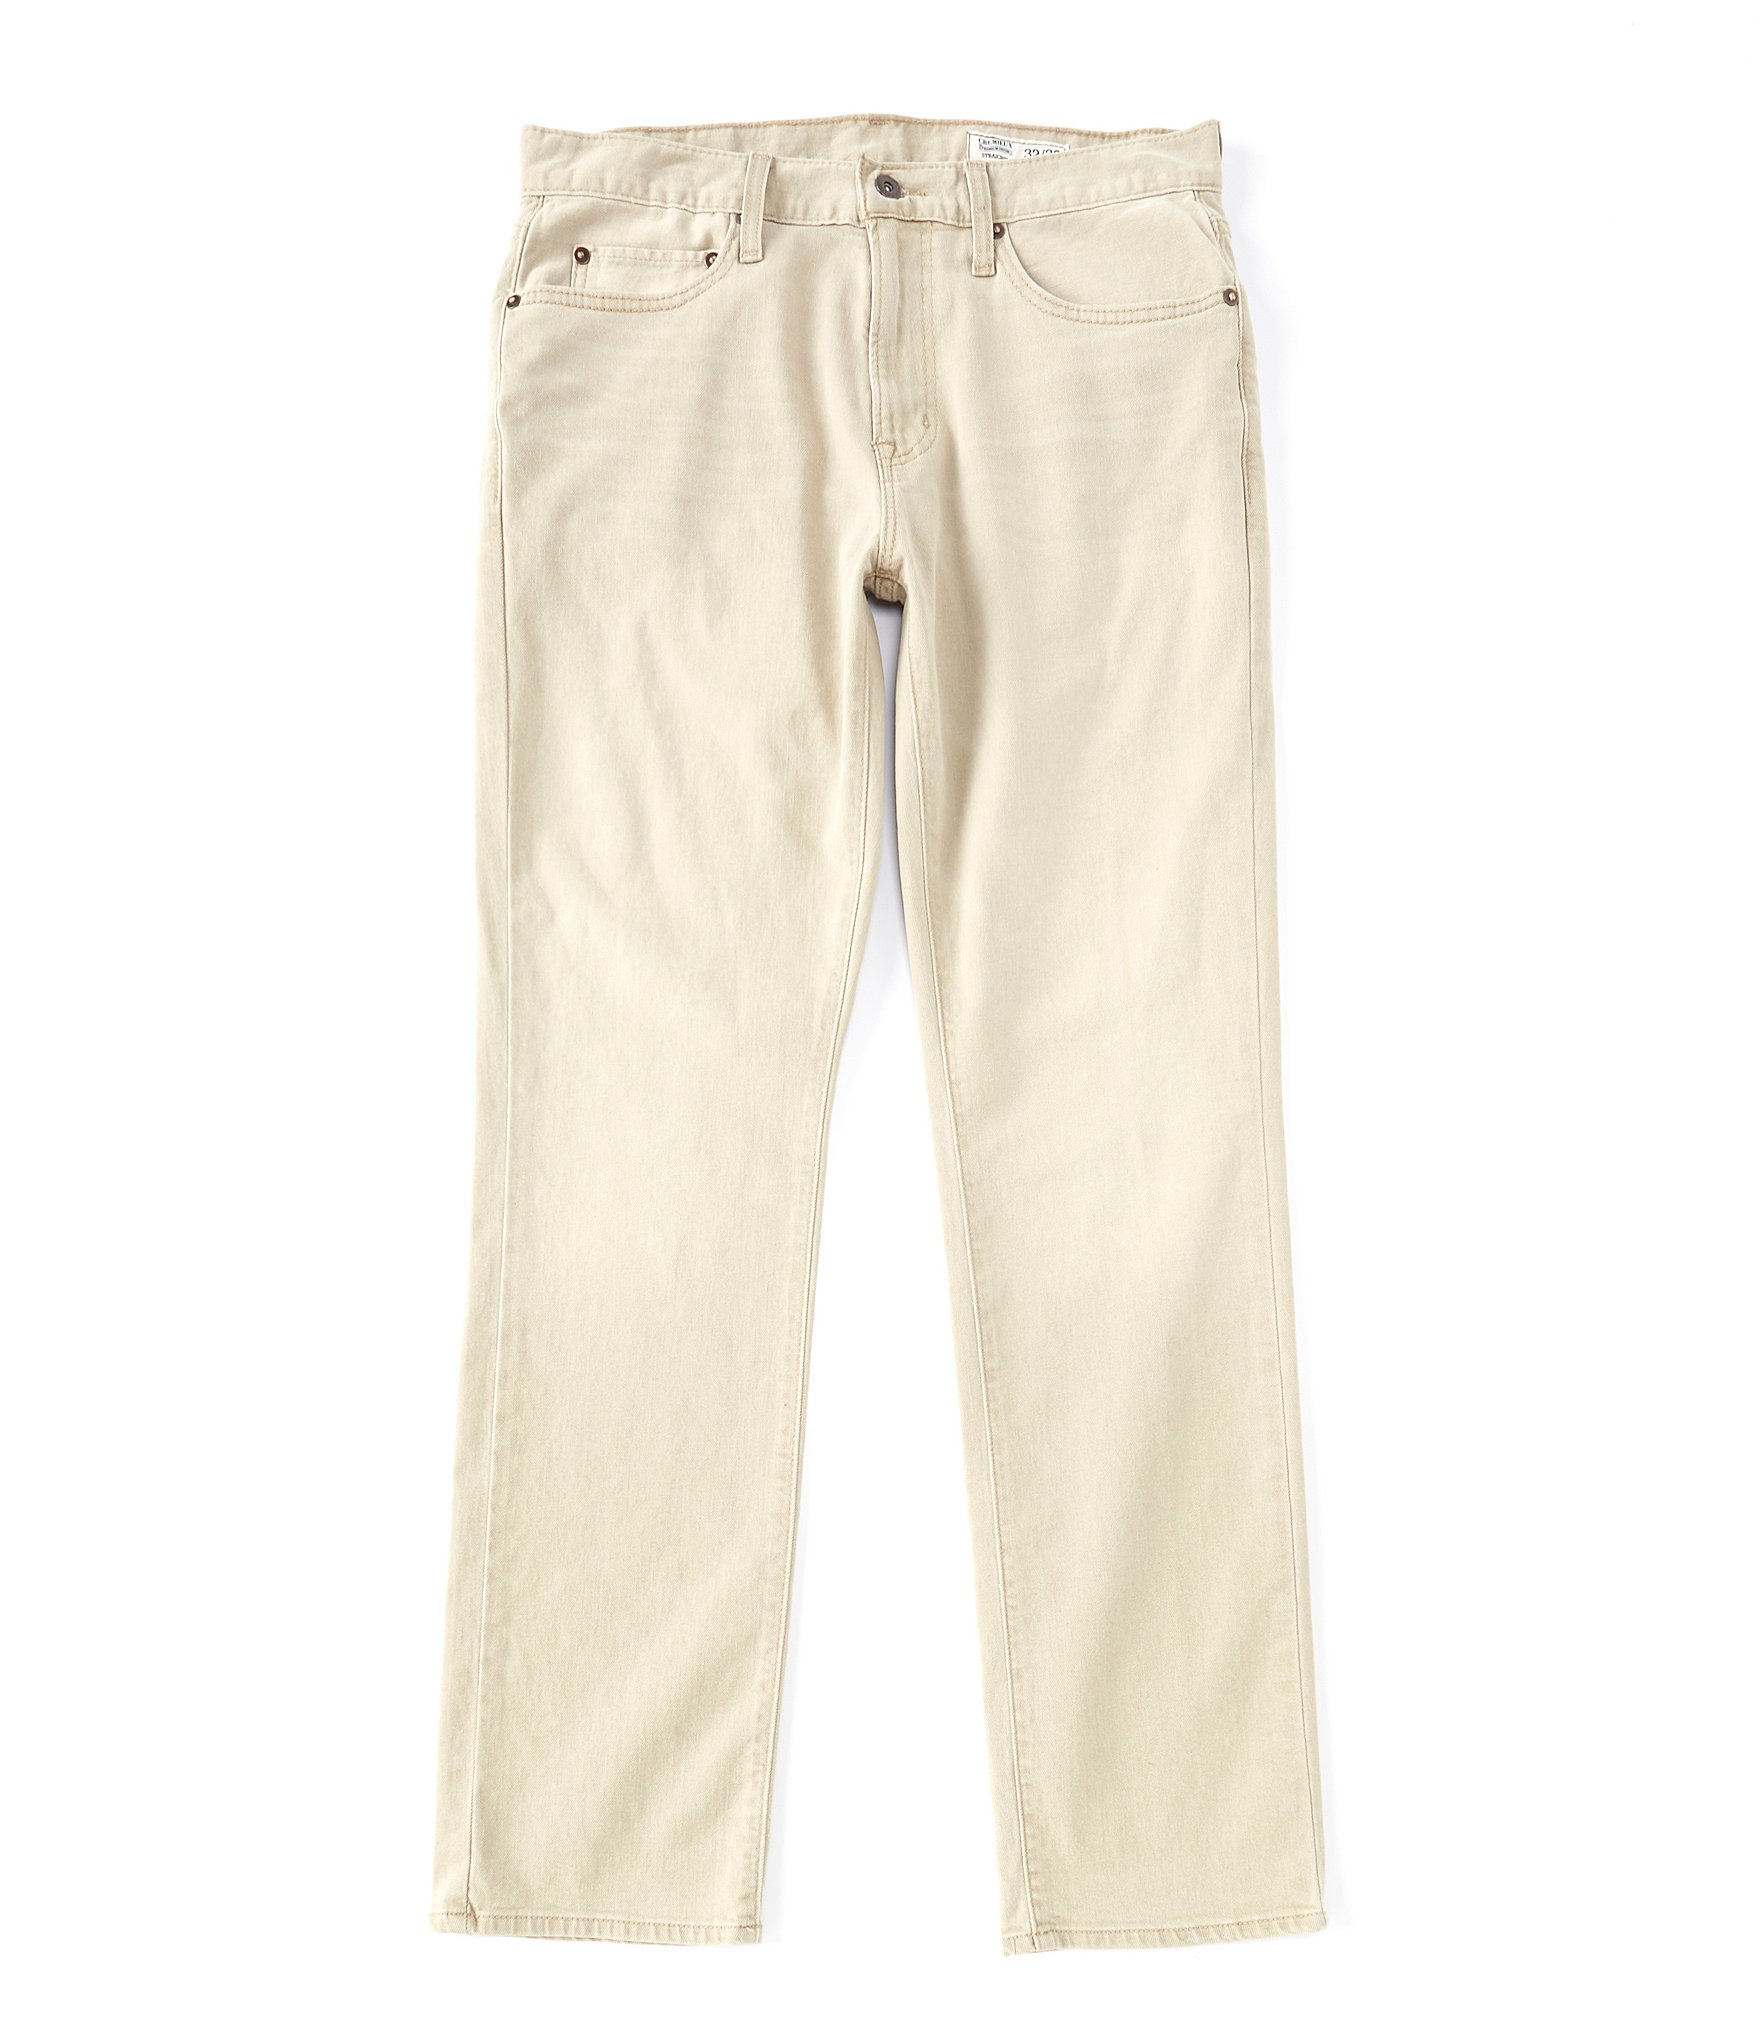 Cremieux Jeans Straight-Fit Khaki Stretch Denim Jeans | Dillard's